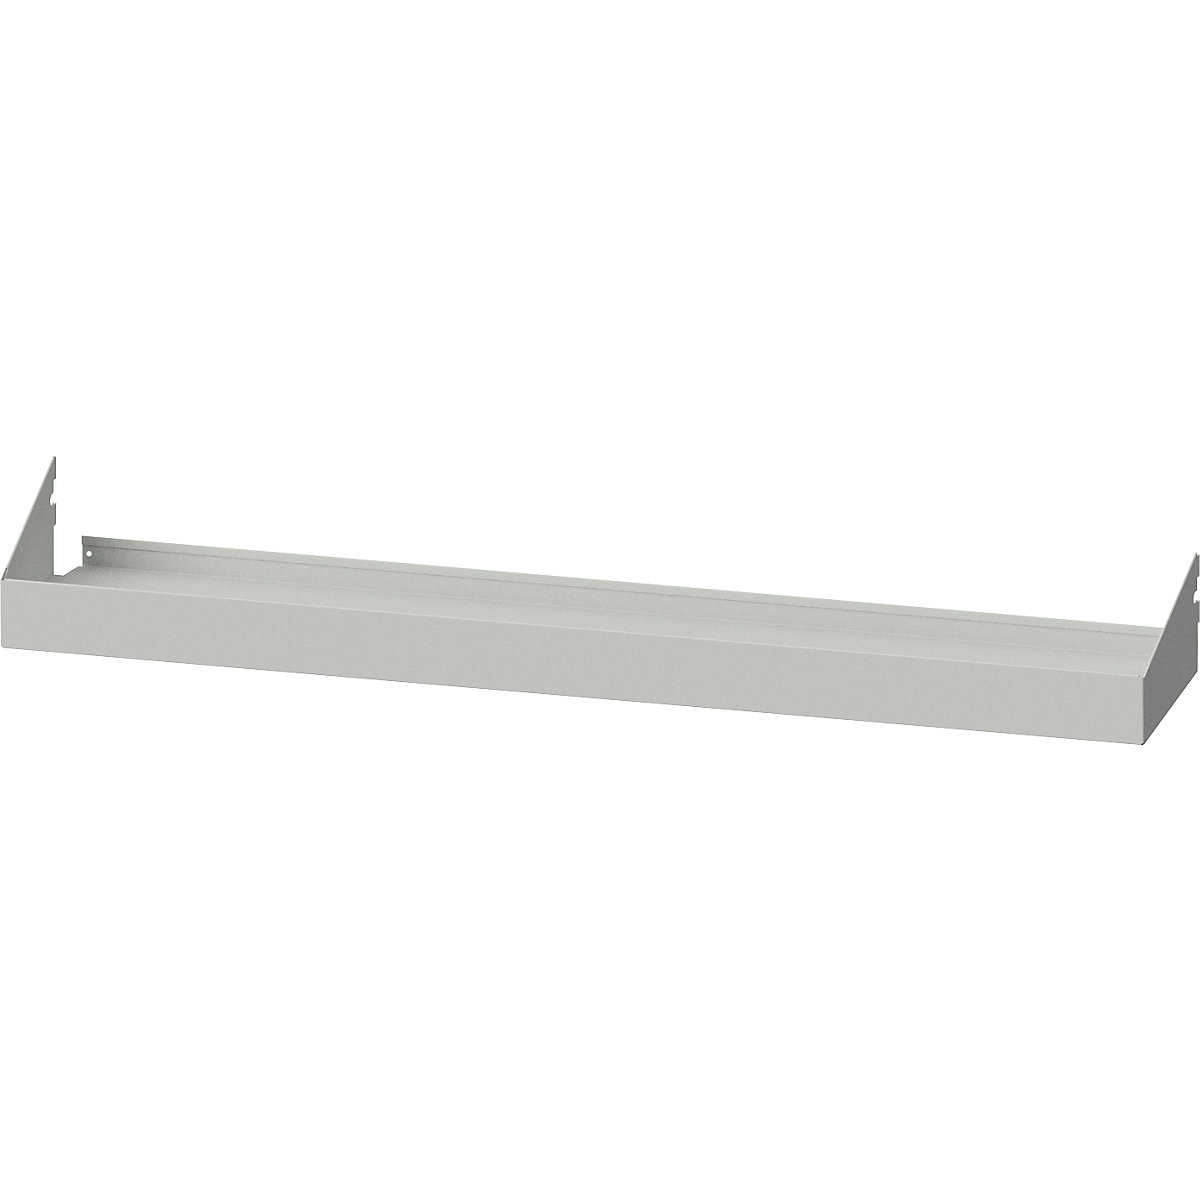 Tray shelf – ANKE, 75 mm raised edges, WxD 1250 x 250 mm, grey-3